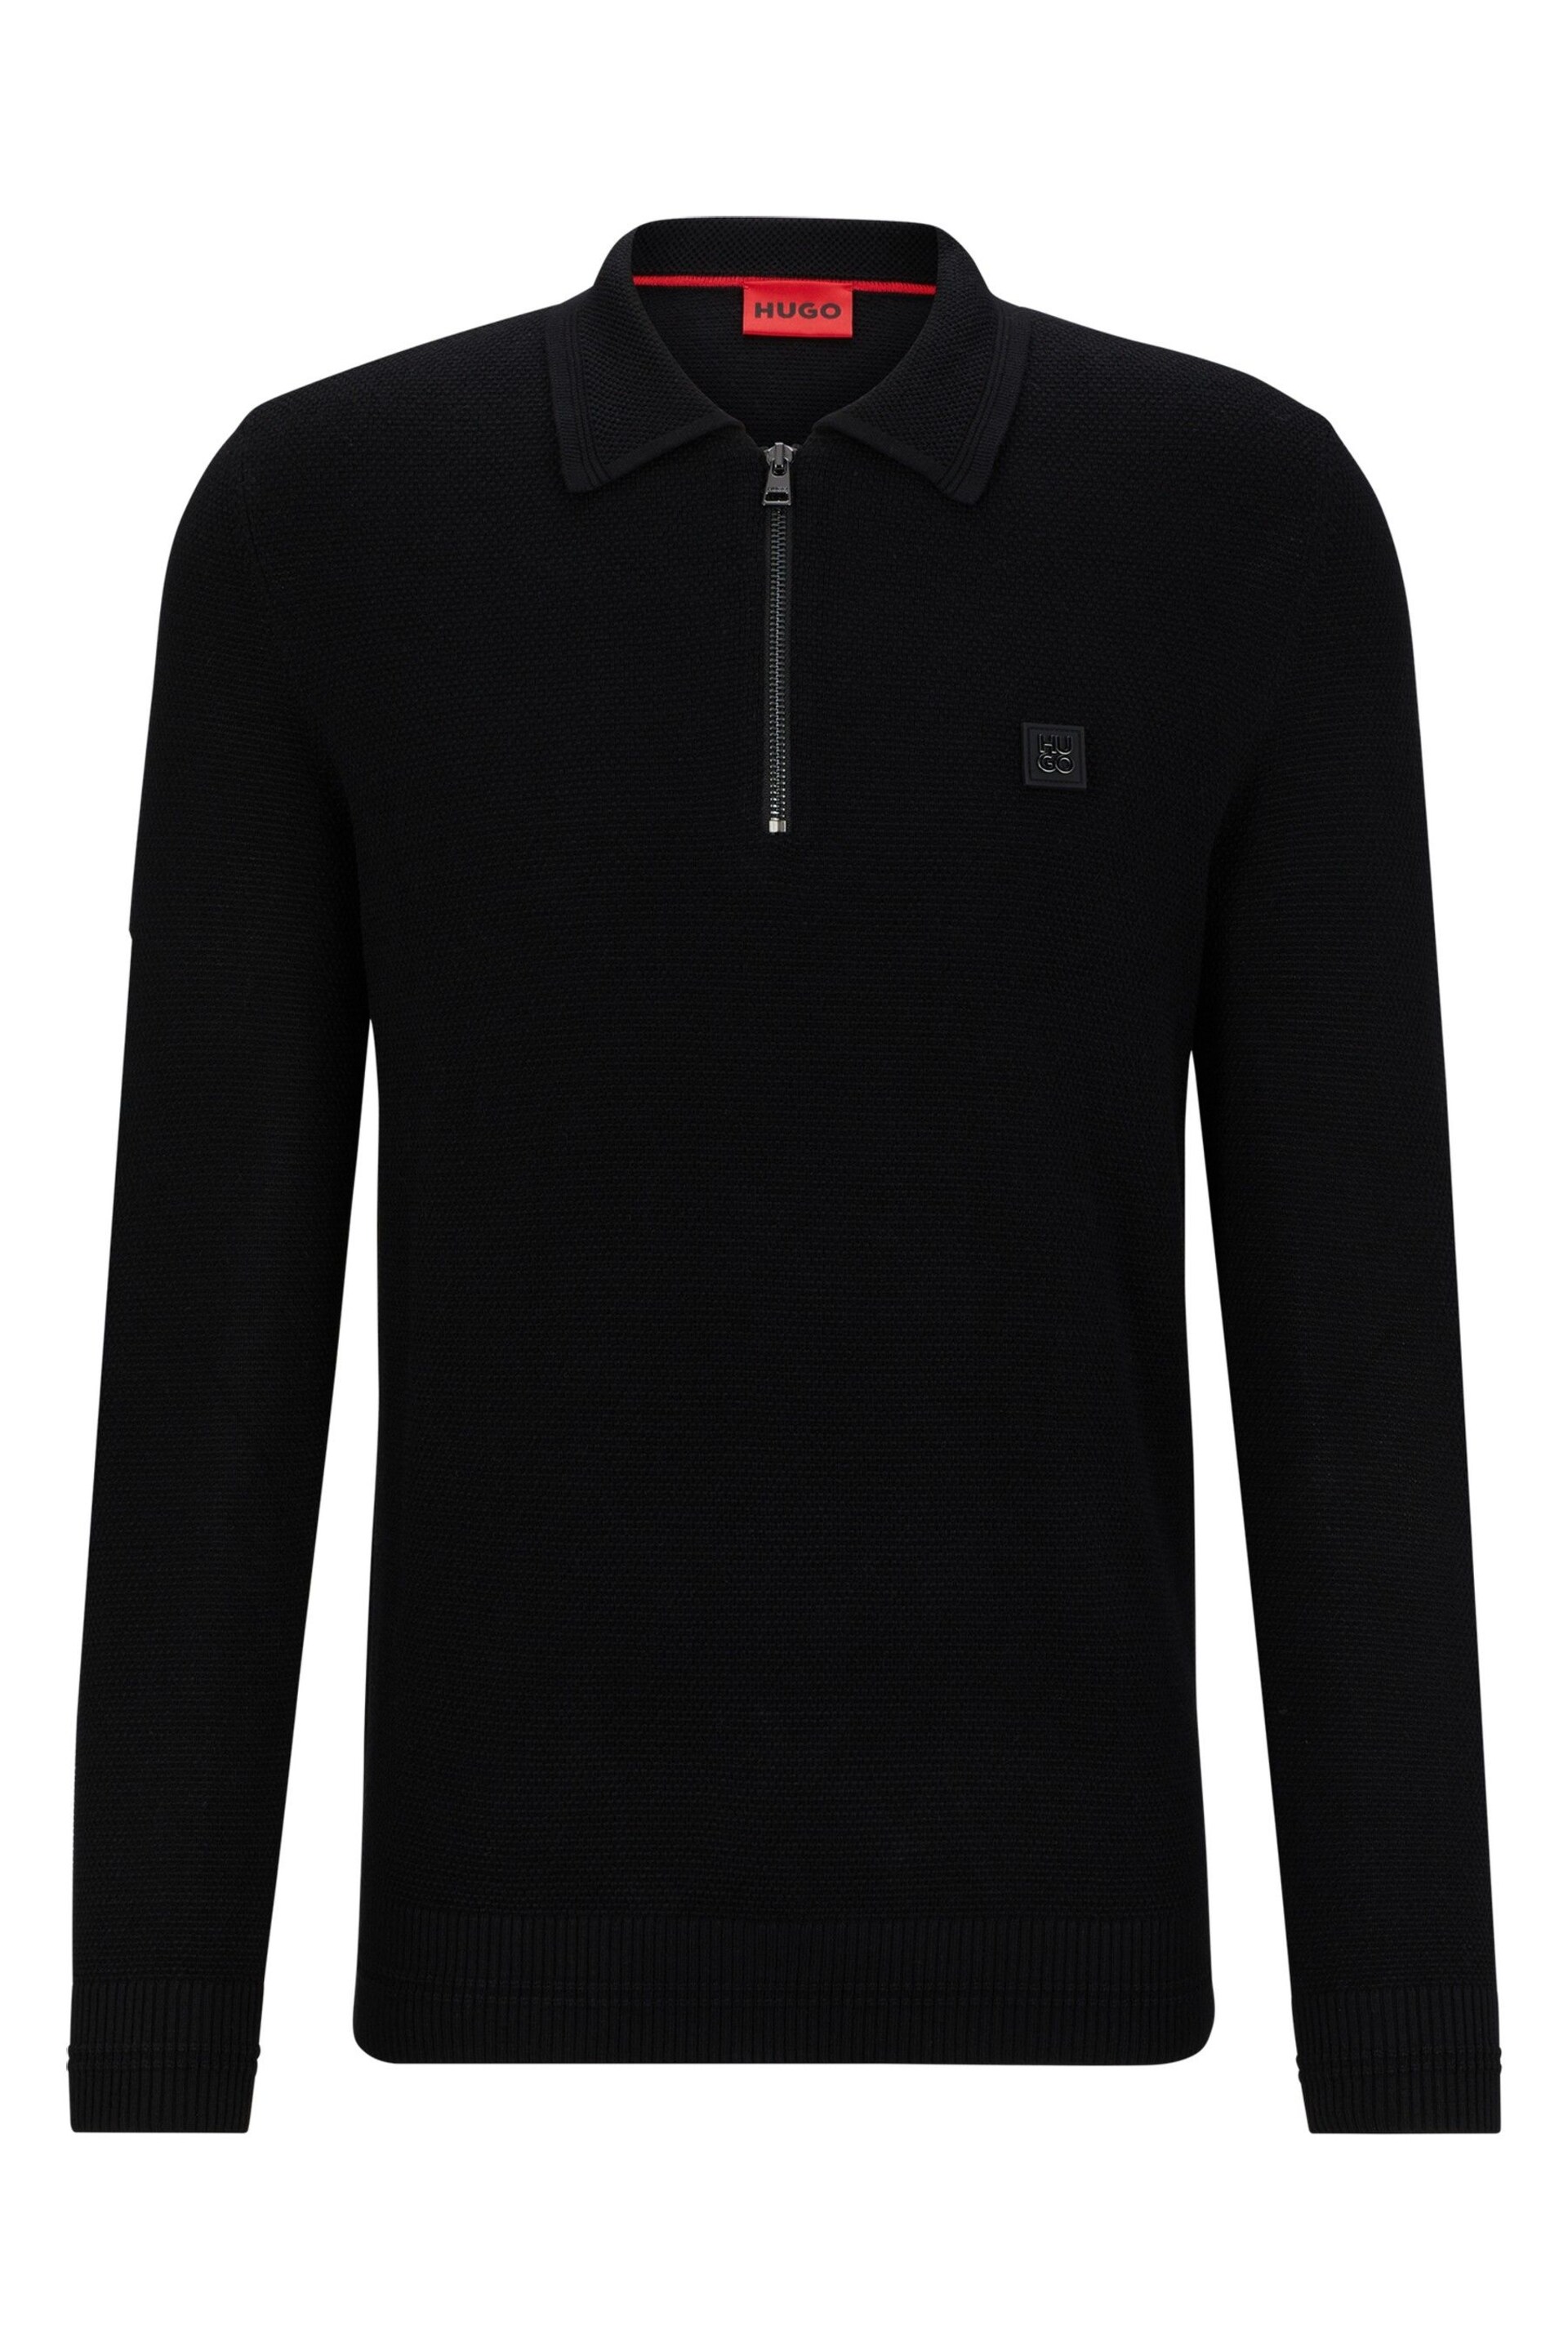 HUGO Black Zip Neck Textured Polo Shirt - Image 5 of 5